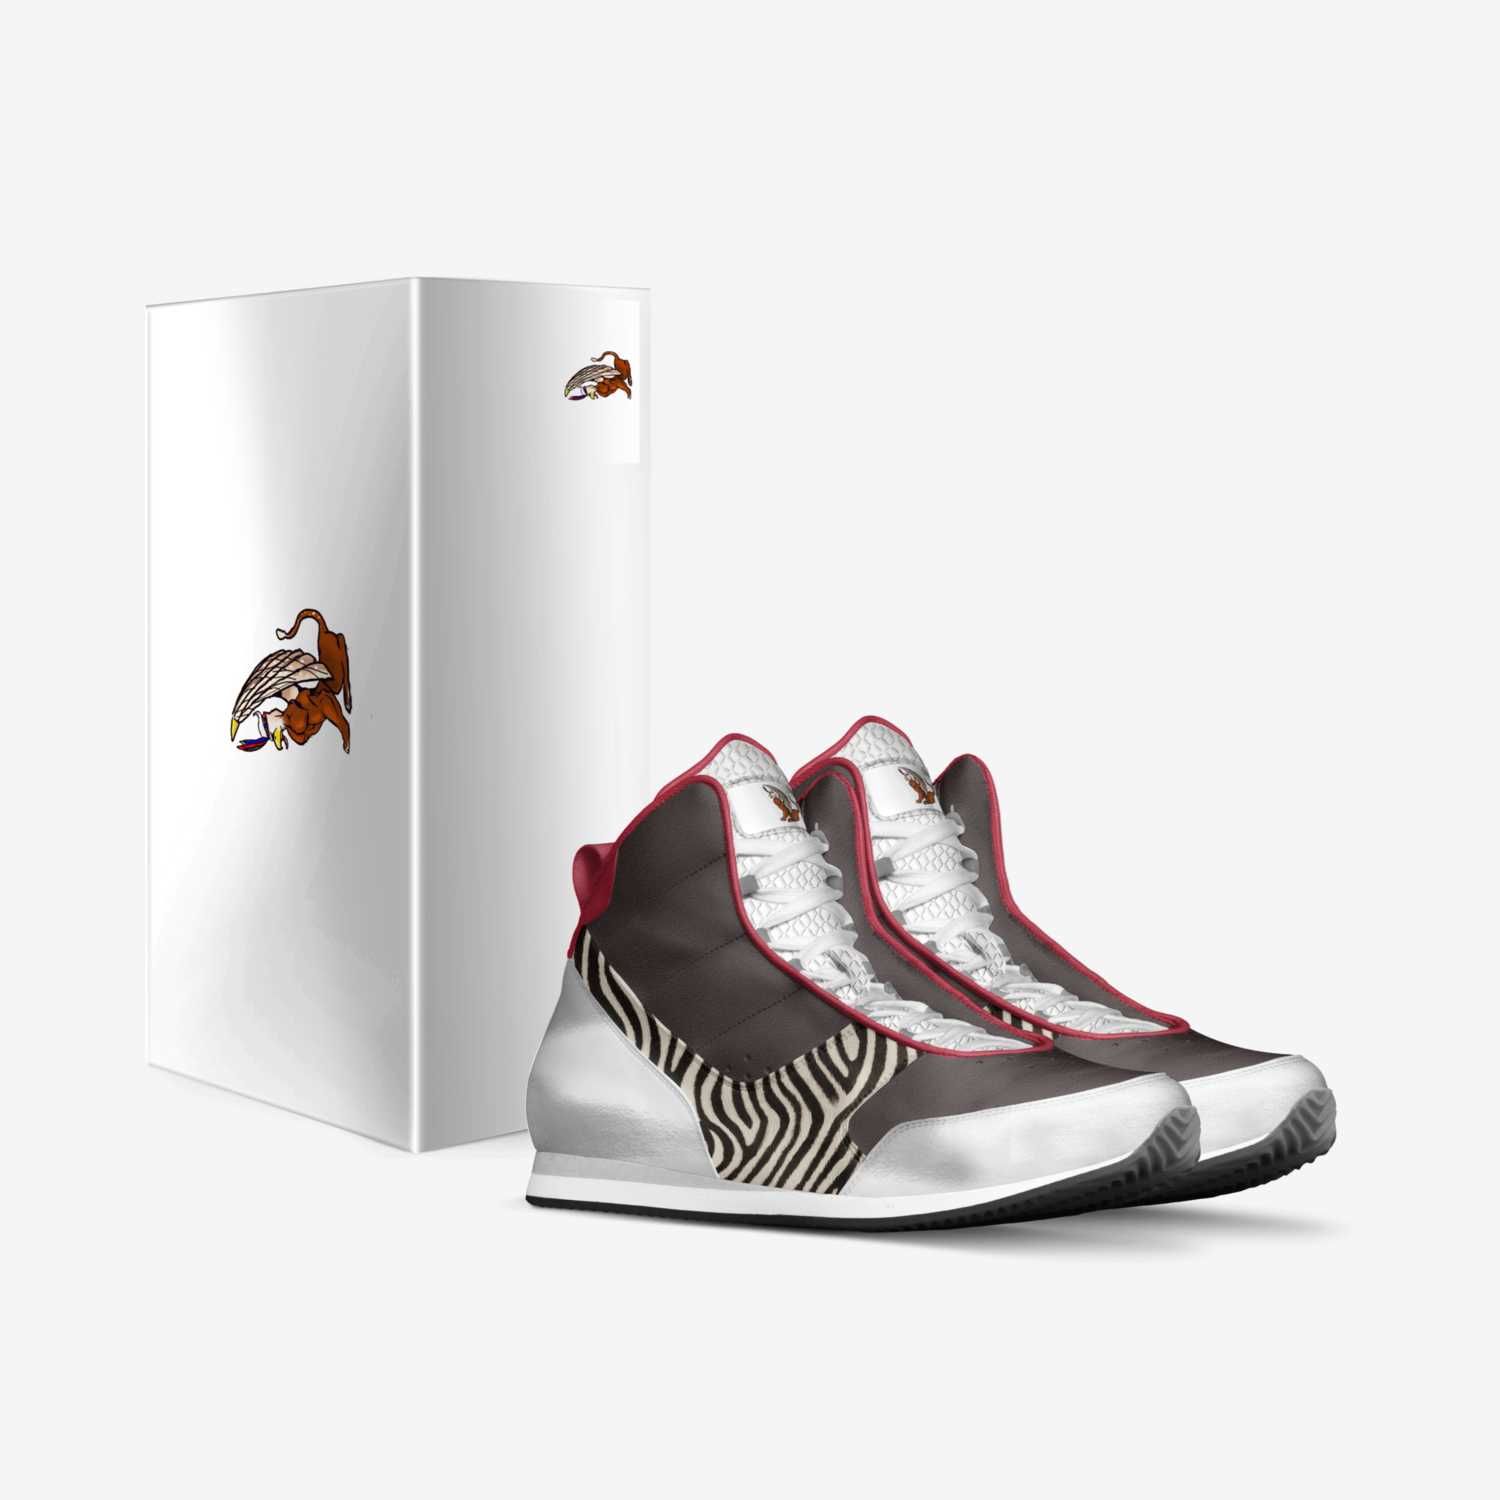 O J A I M A X I custom made in Italy shoes by Maxie Ojai Bell | Box view